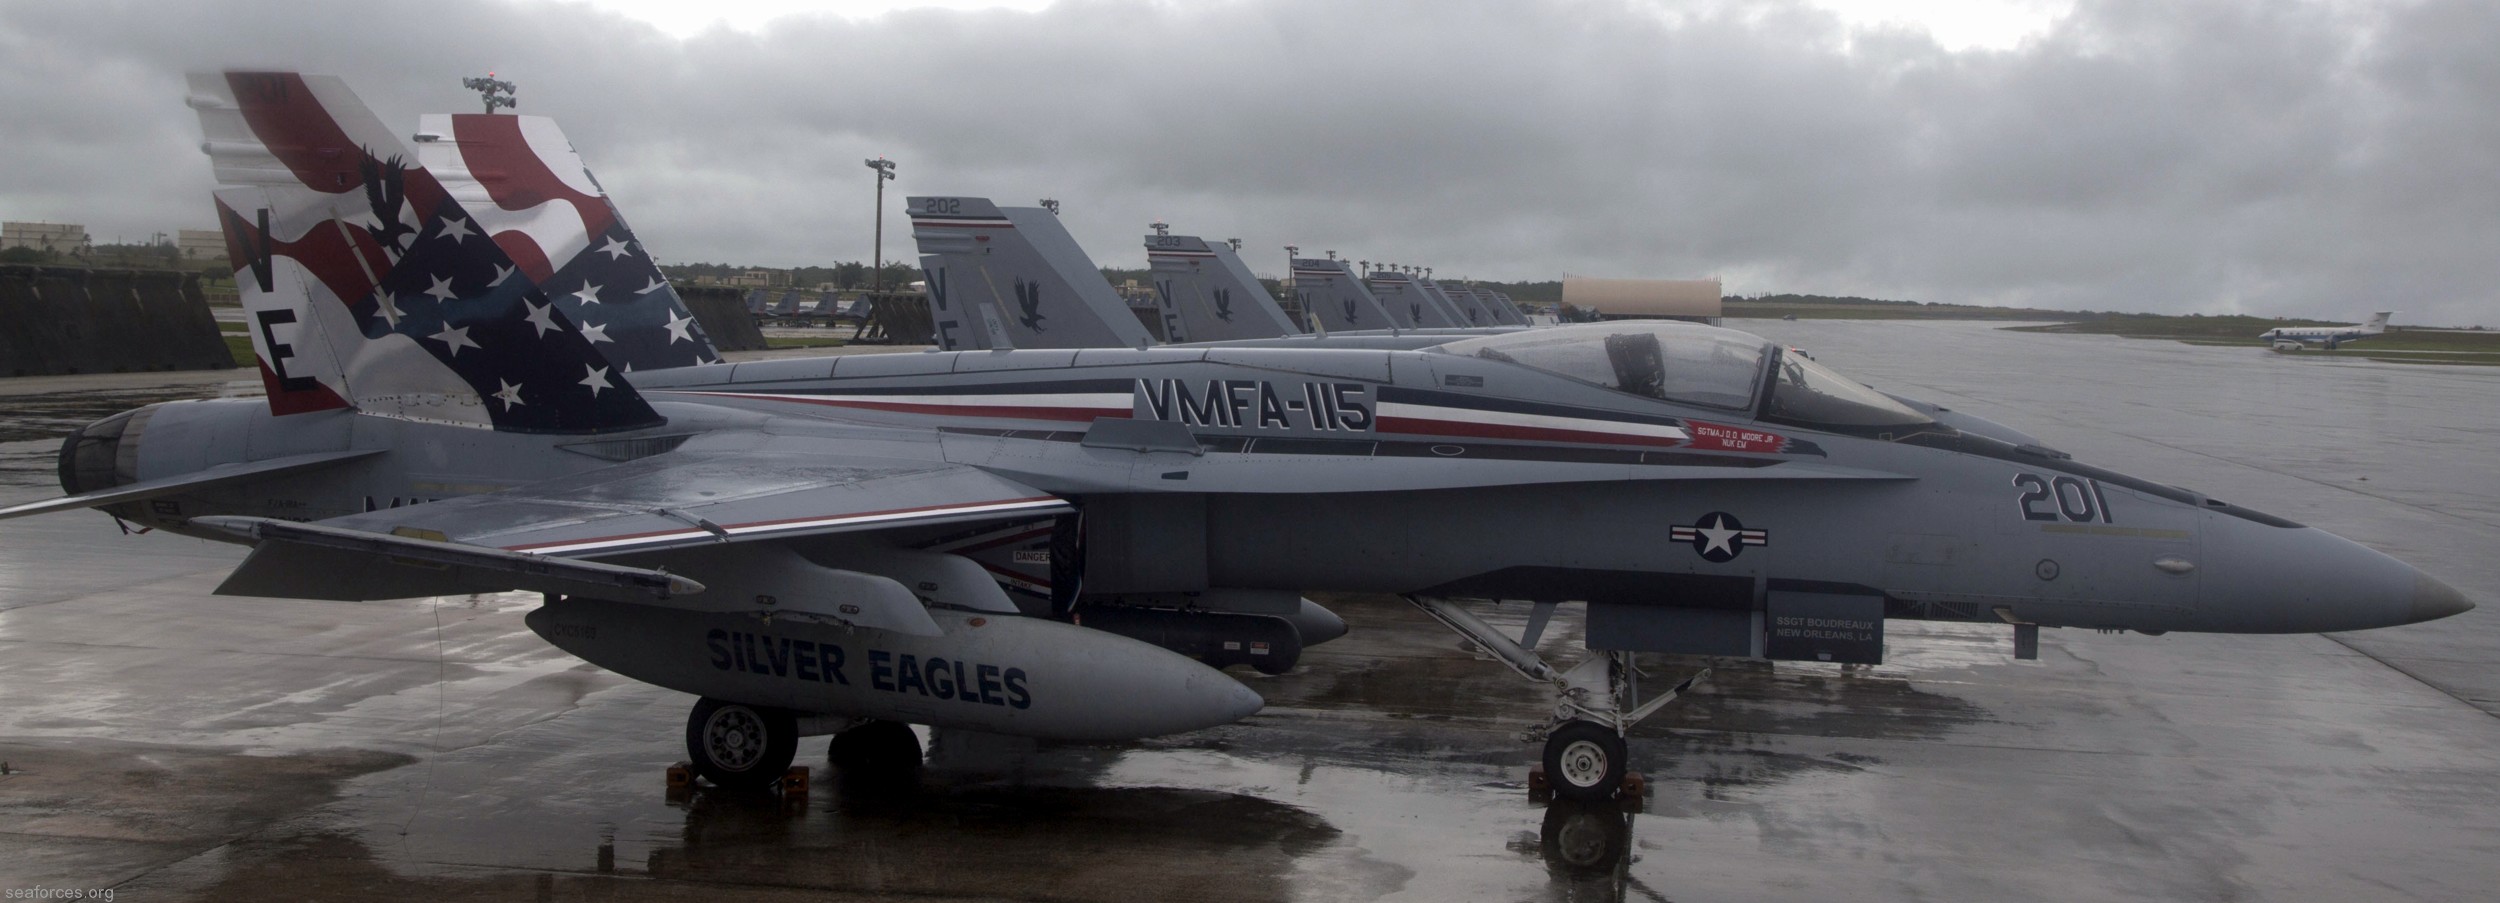 vmfa-115 silver eagles marine fighter attack squadron f/a-18a+ hornet 138 andersen afb guam